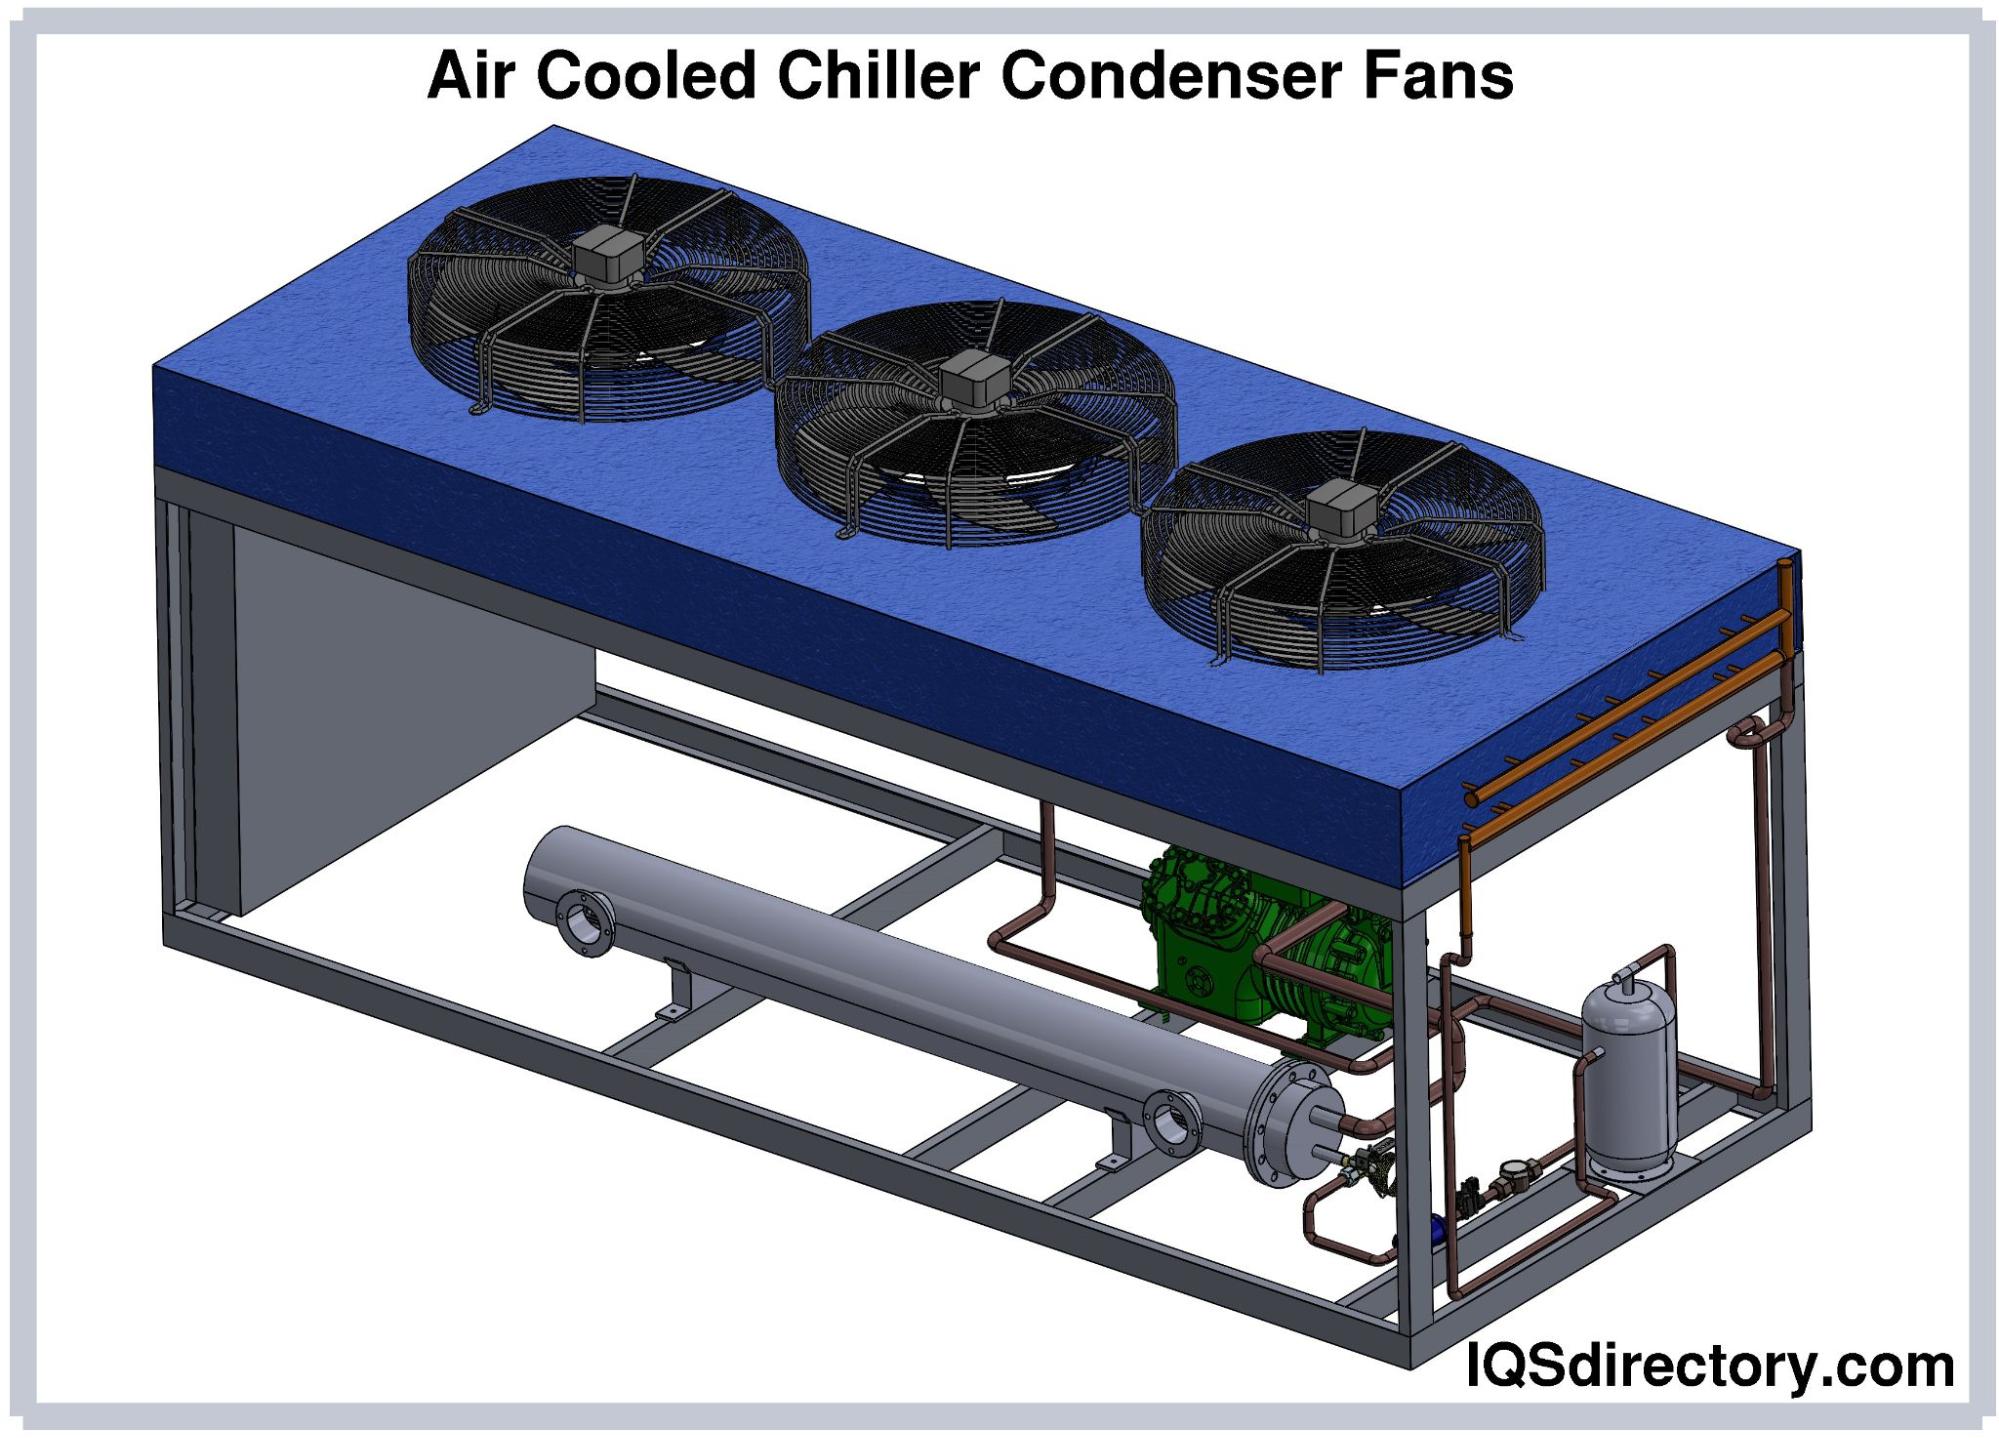 Air Cooled Chiller Condenser Fans